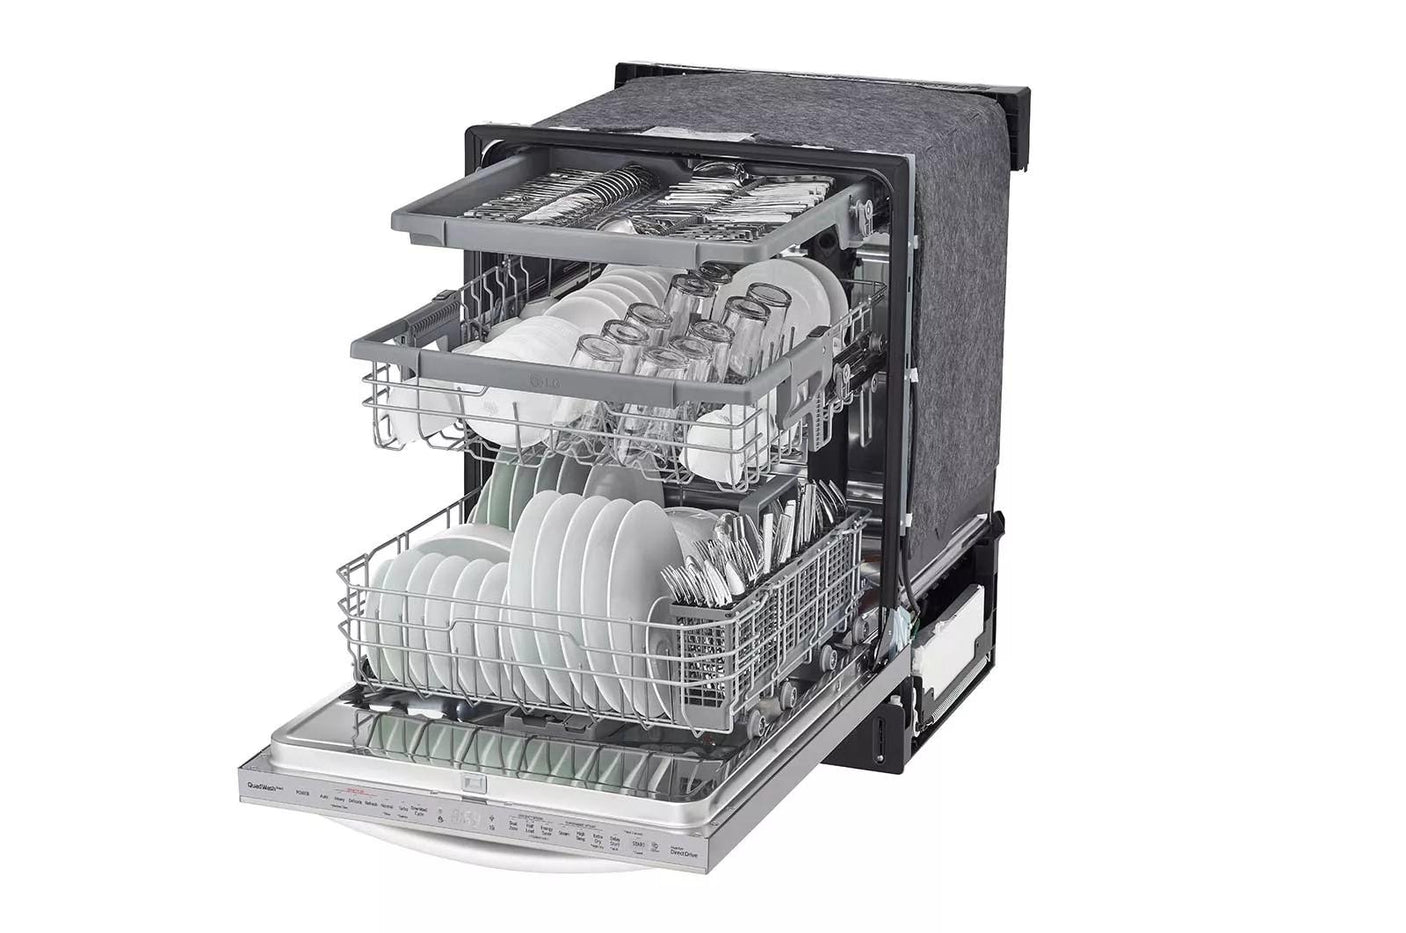 Top Control Smart Dishwasher with QuadWash™